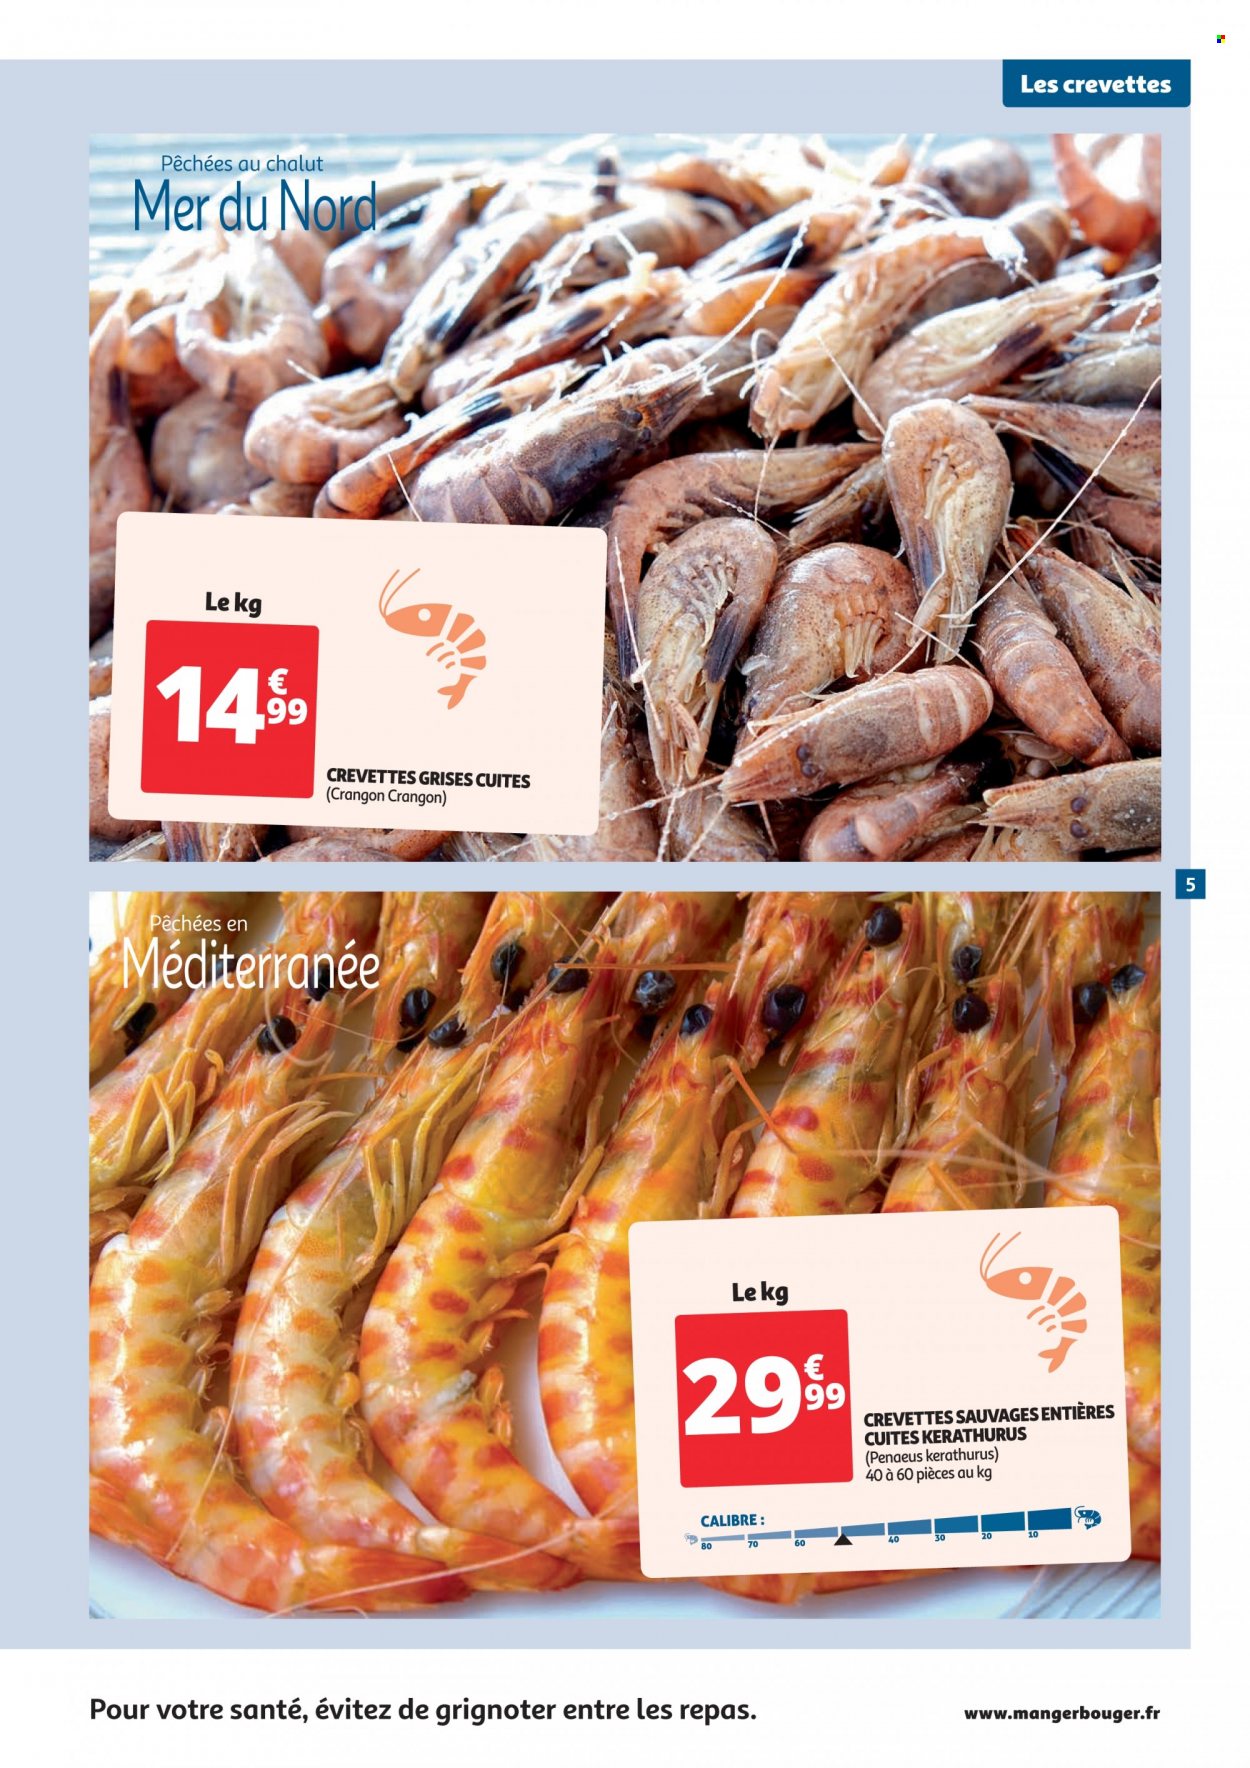 Catalogue Auchan - 28.03.2023 - 03.04.2023. 